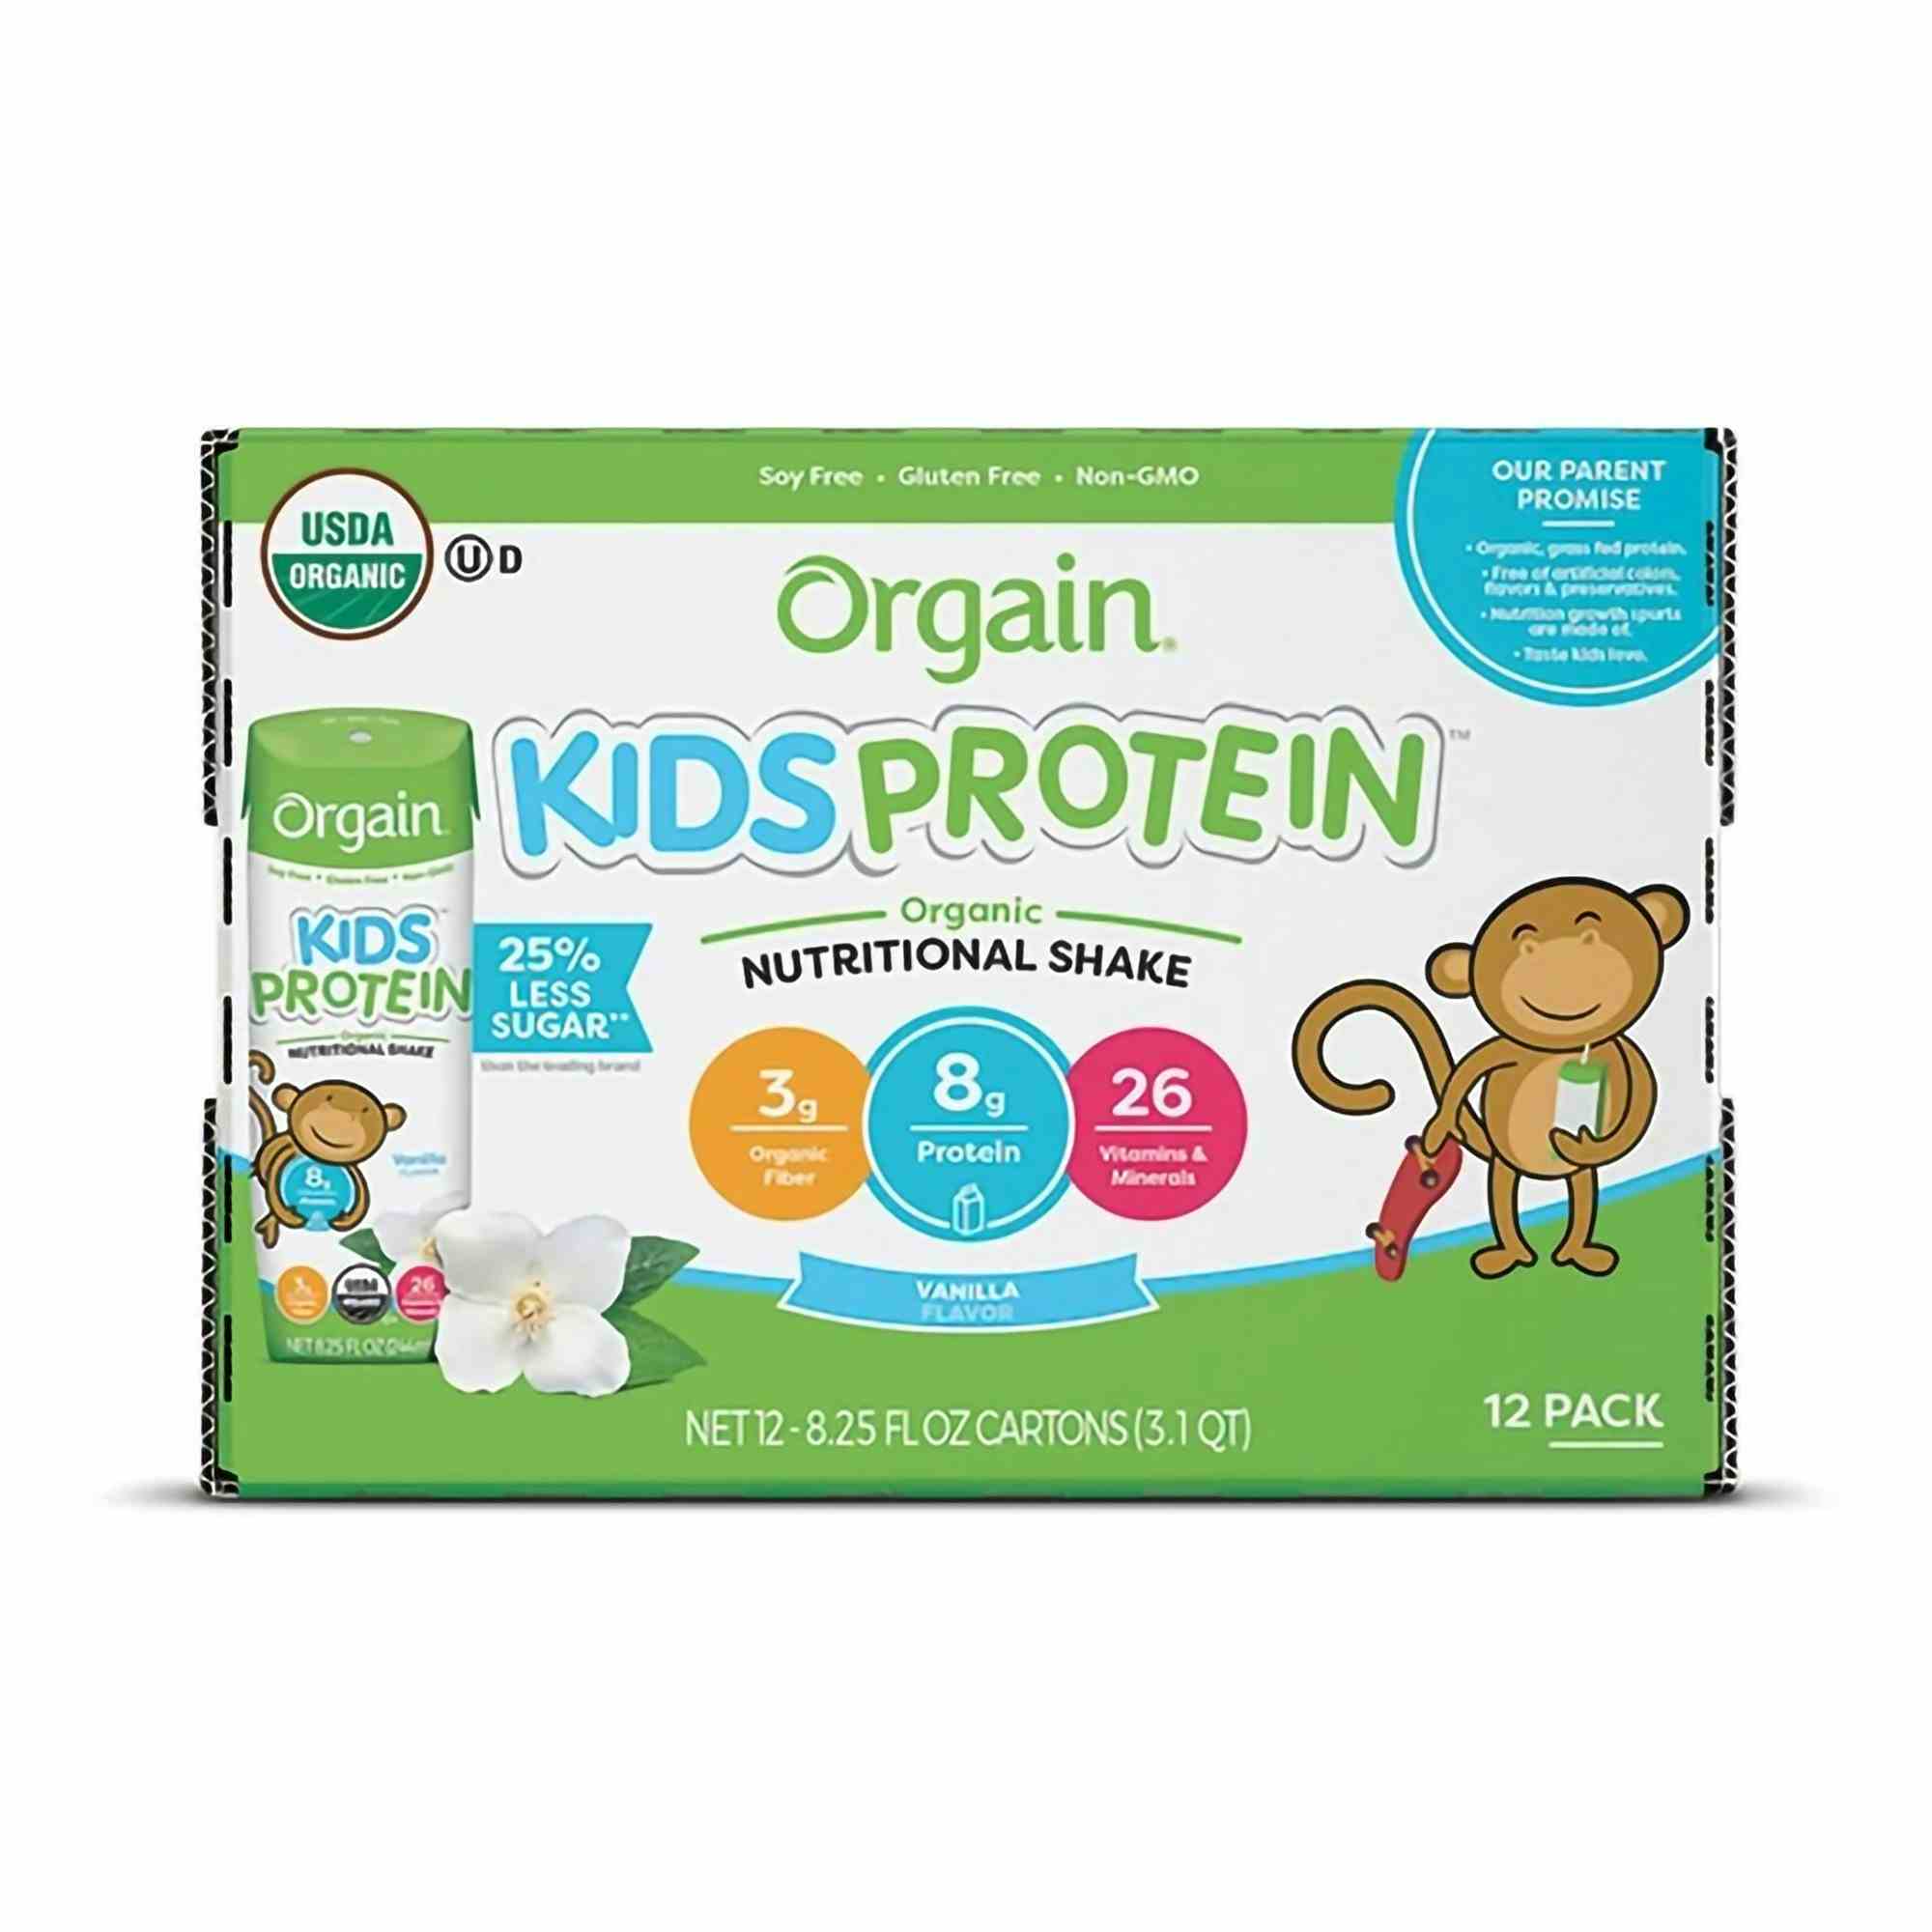 Orgain Kids Protein Organic Nutritional Shake, Vanilla, 8.25 oz., 851770003100, Case of 12